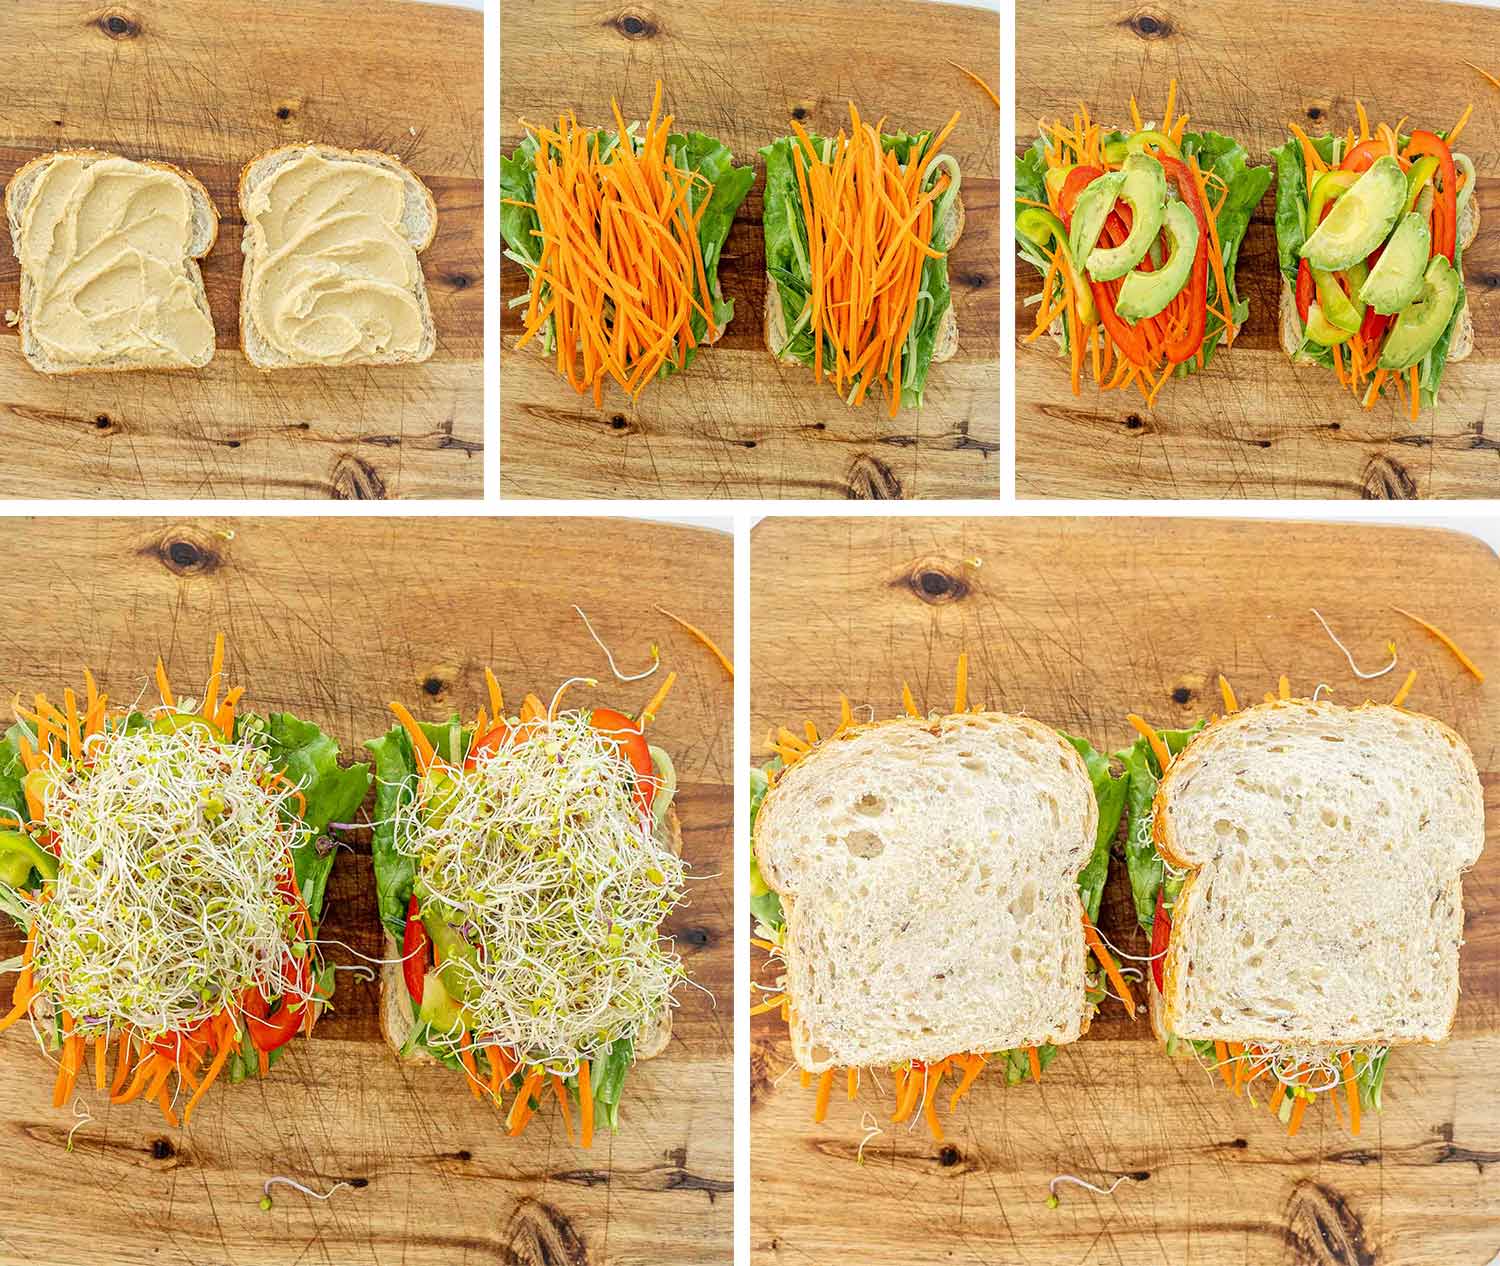 process shots showing how to make veggie hummus sandwich.